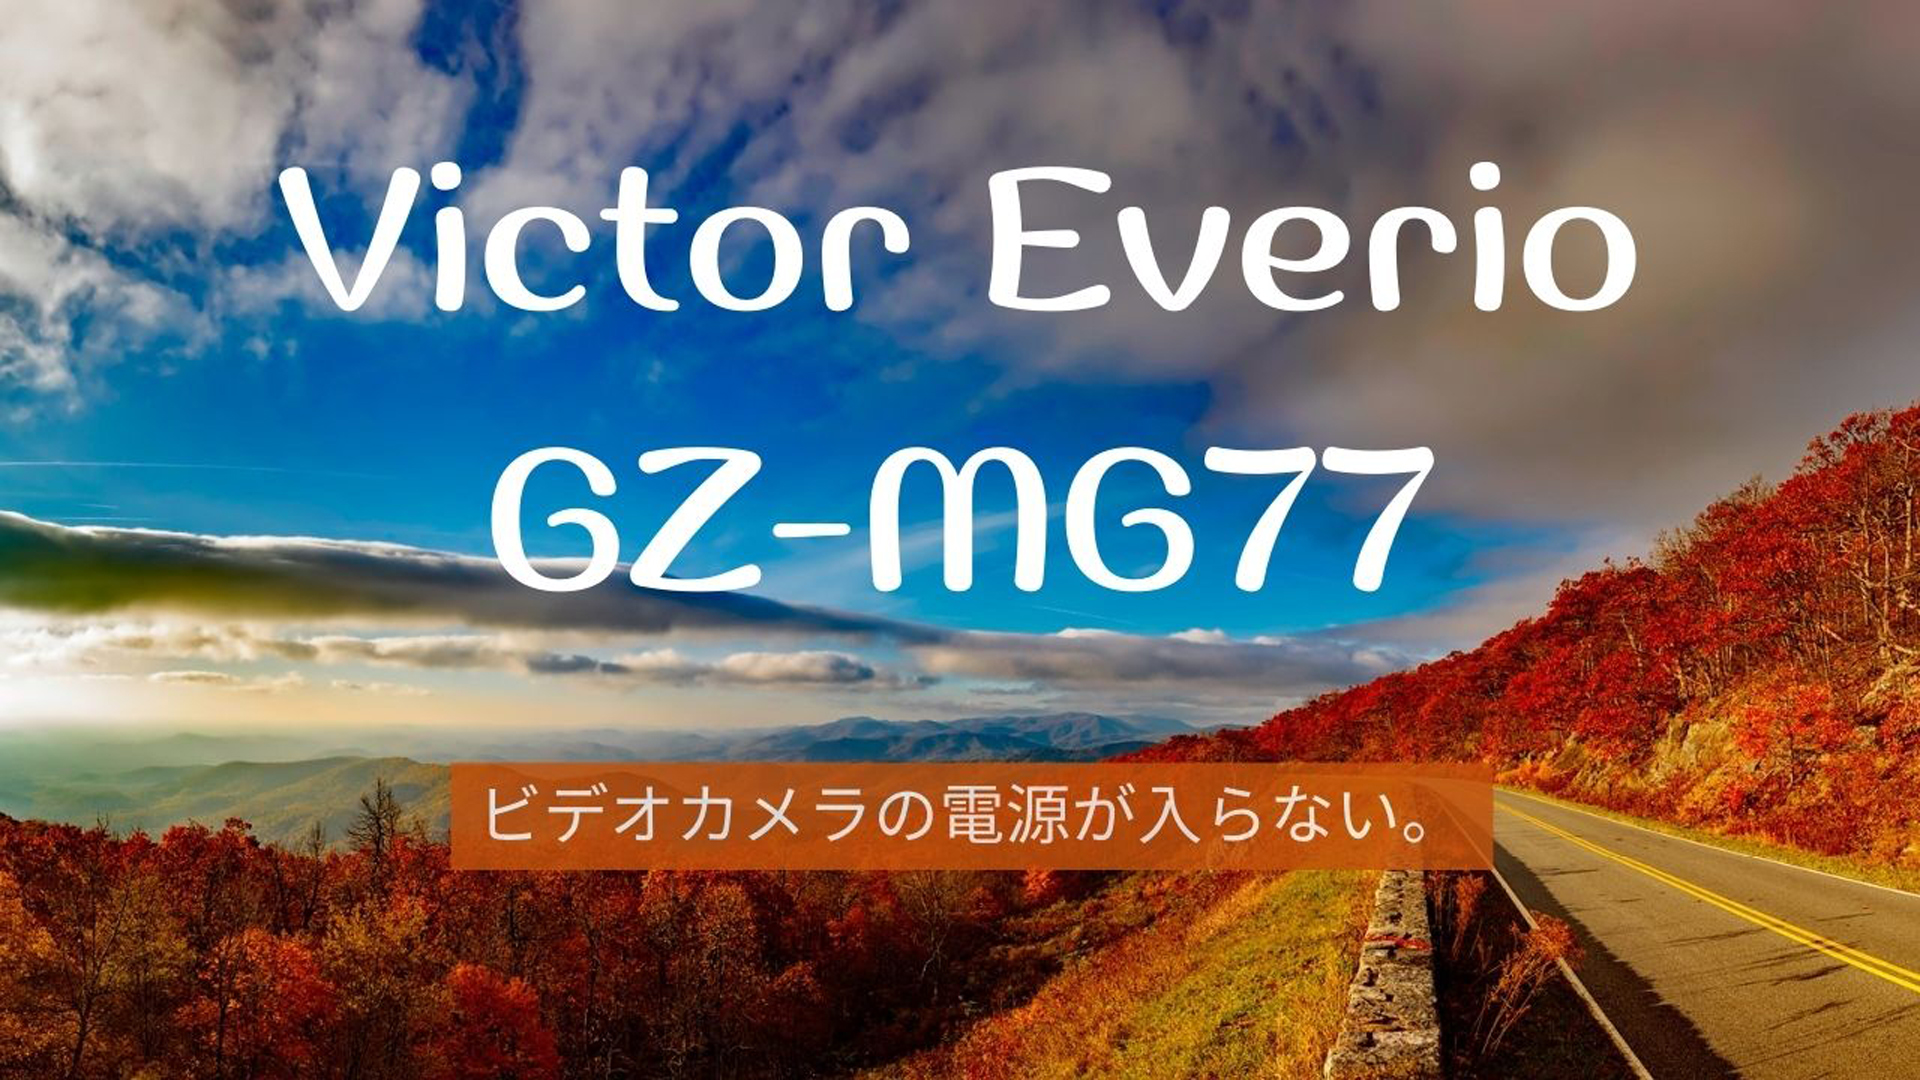 Victor Everio GZ-MG77データ復旧成功事例